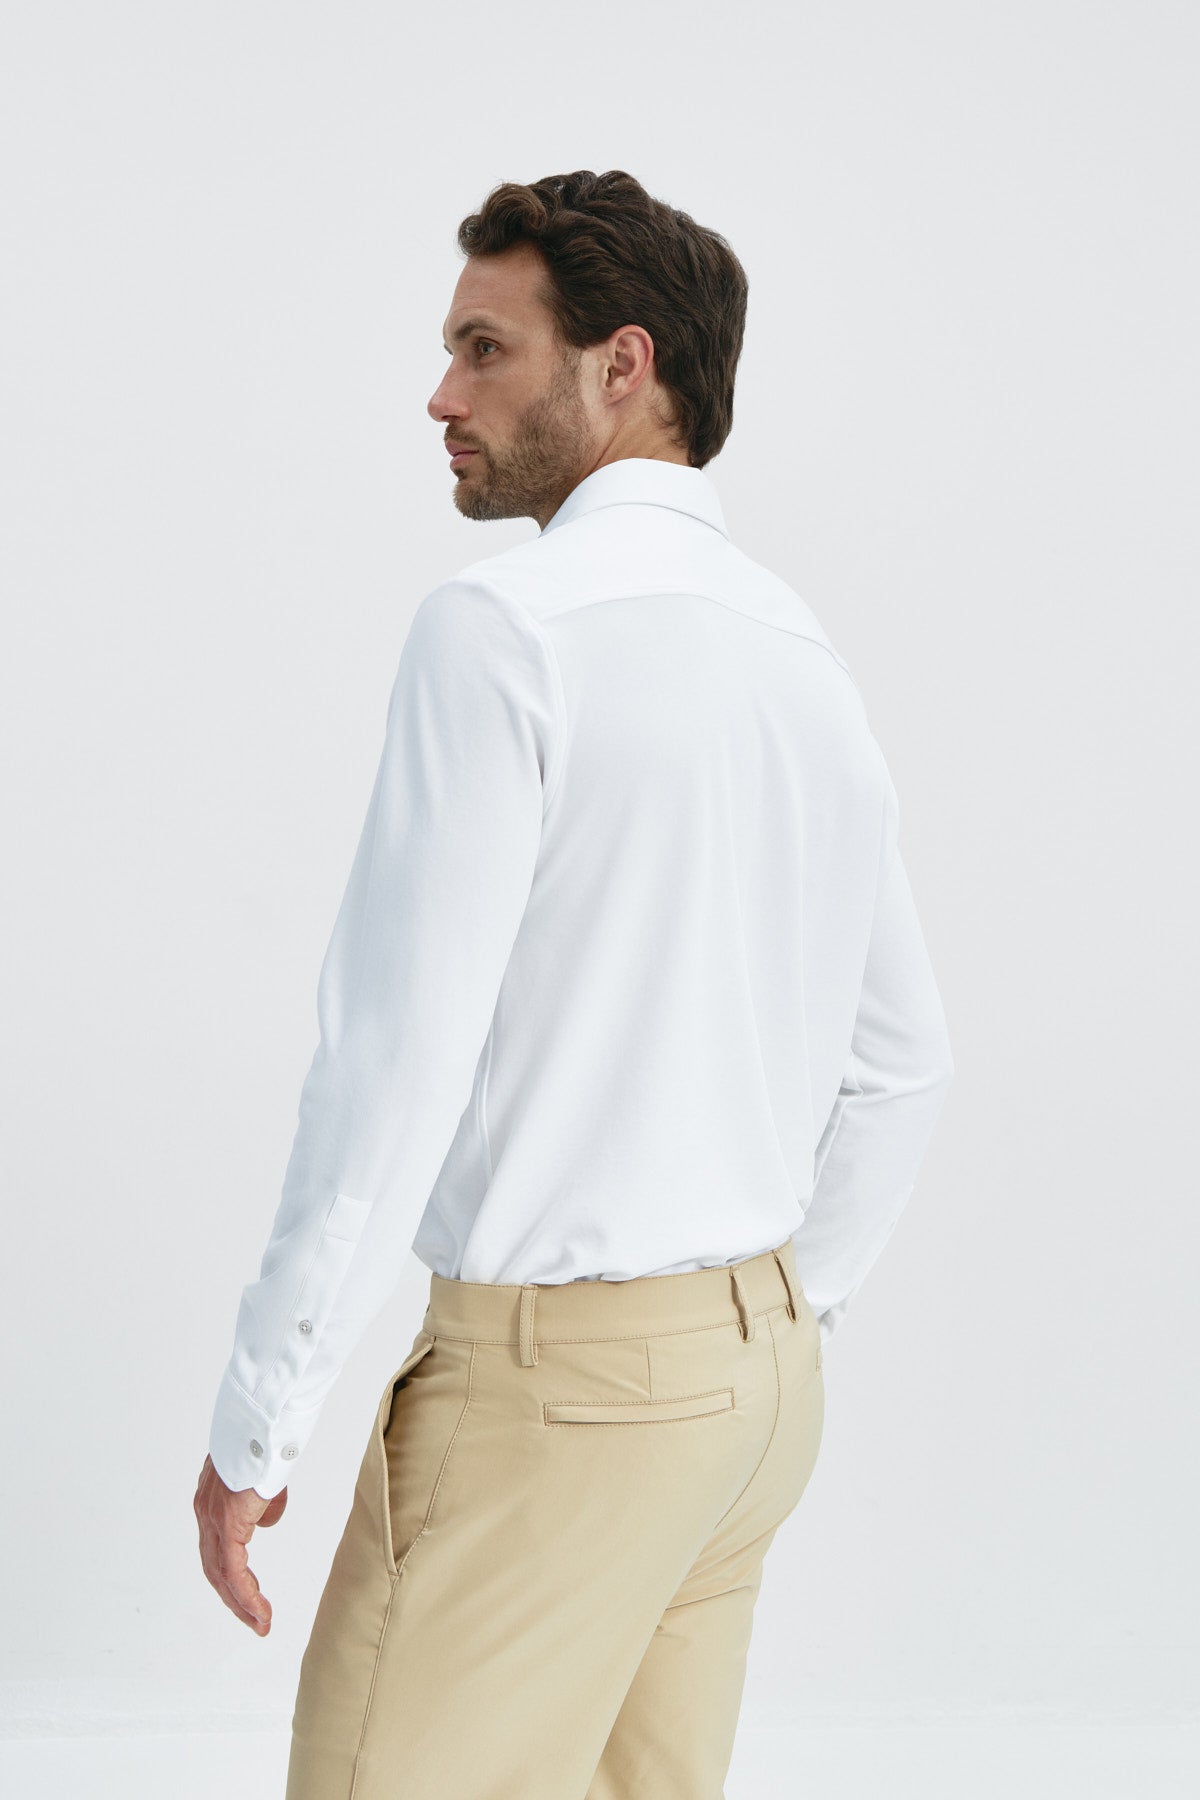 Camisa de vestir blanca de manga larga regular para hombre Sepiia: Camisa de vestir blanca de manga larga regular para hombre sin arrugas, antimanchas, perfecta para traje o americana. Foto de espalda.